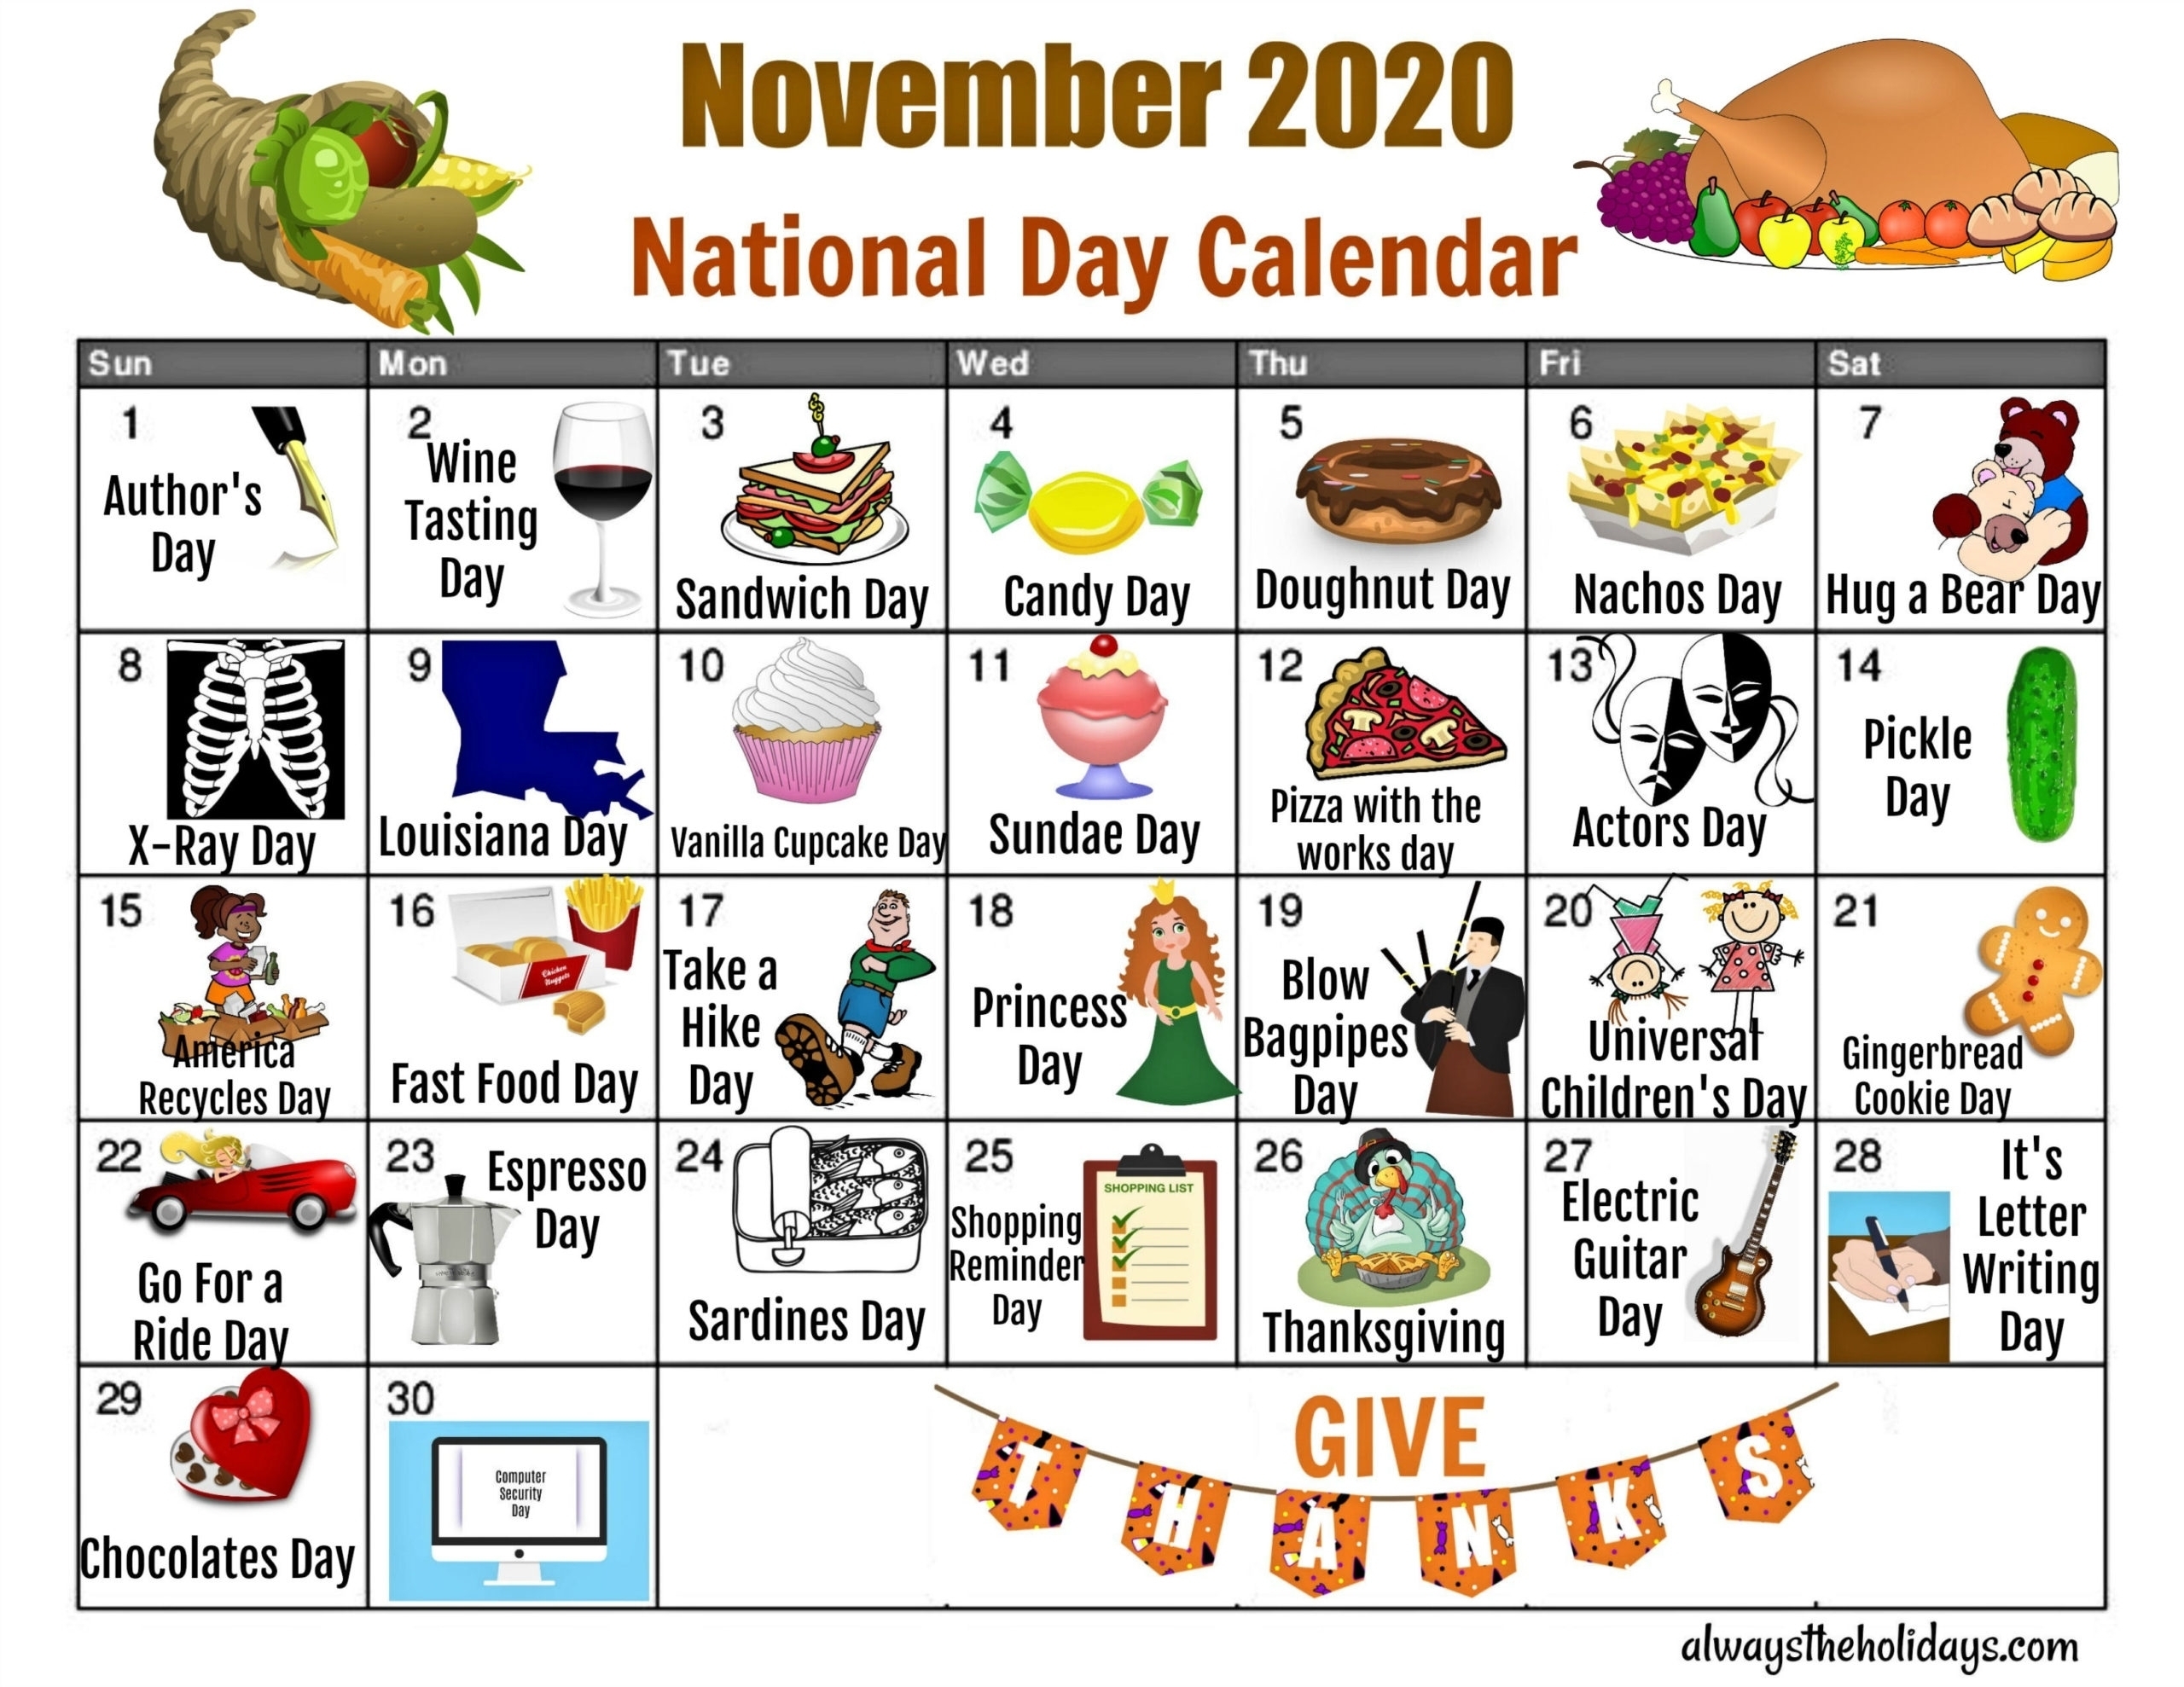 Collect National Day Calendar 2021 Best Calendar Example